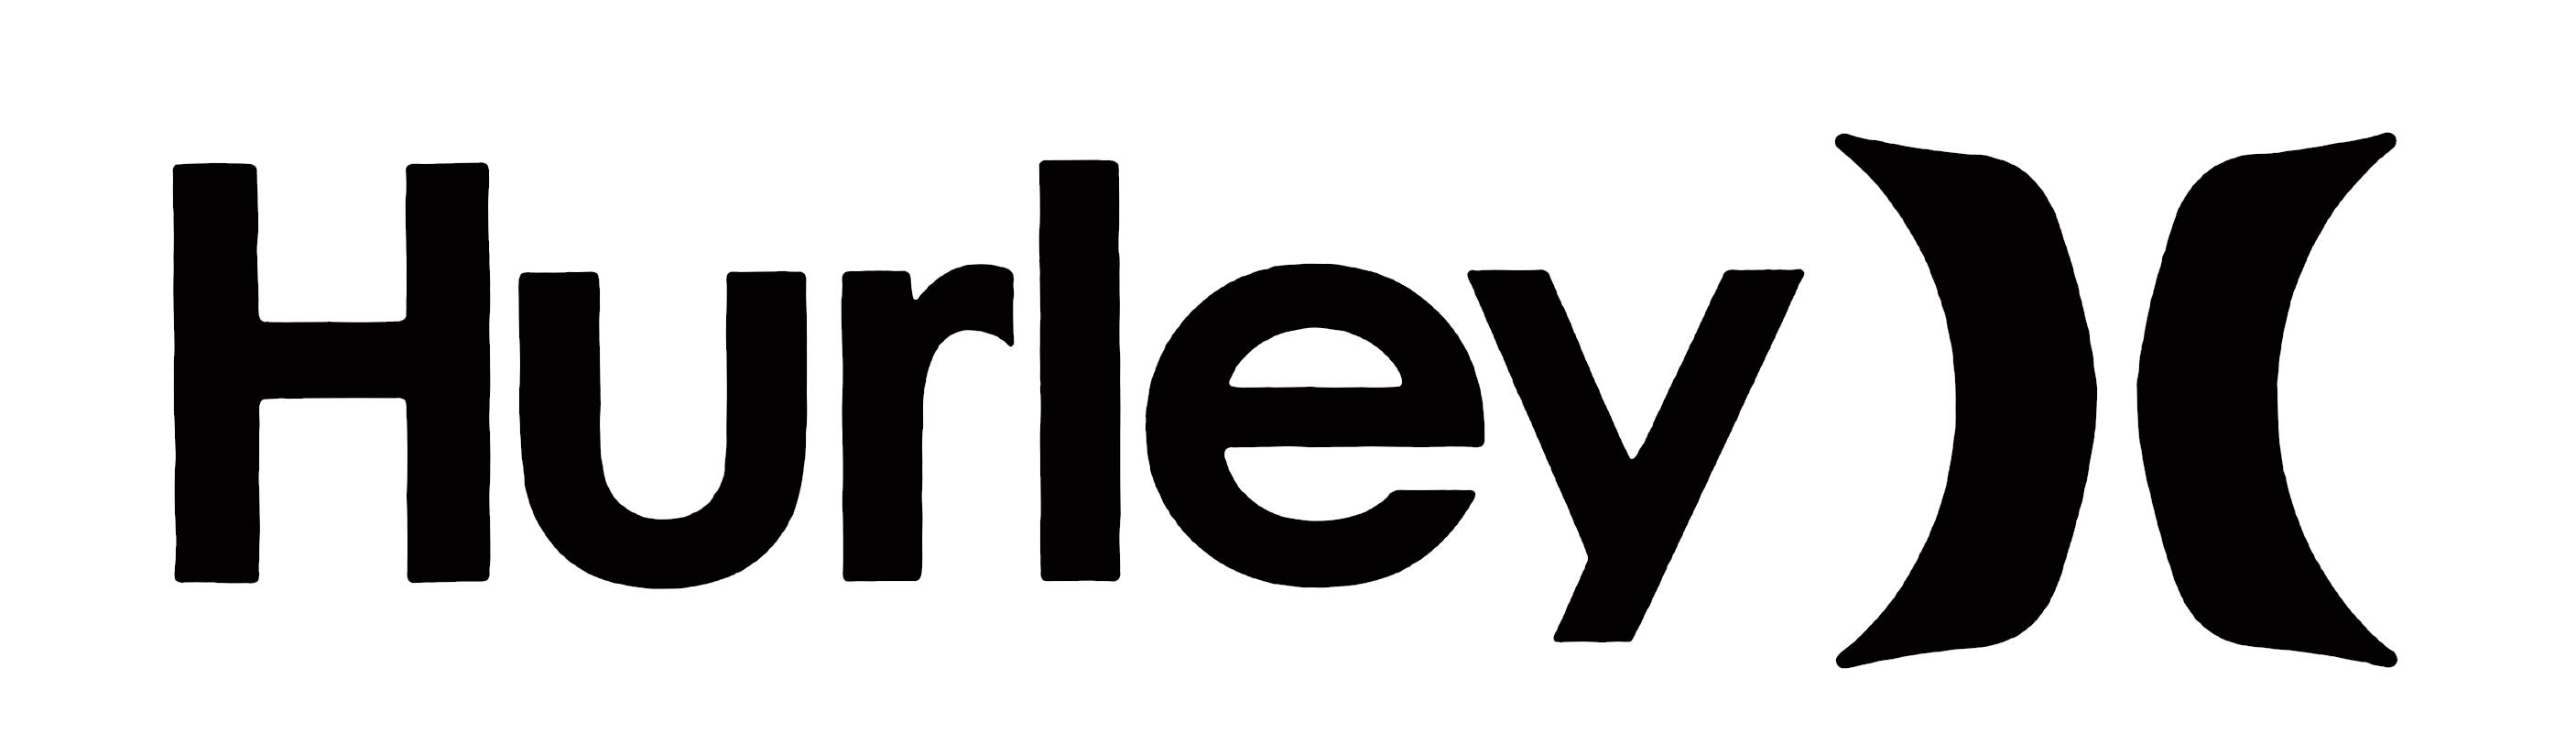 hurley logo wallpapers